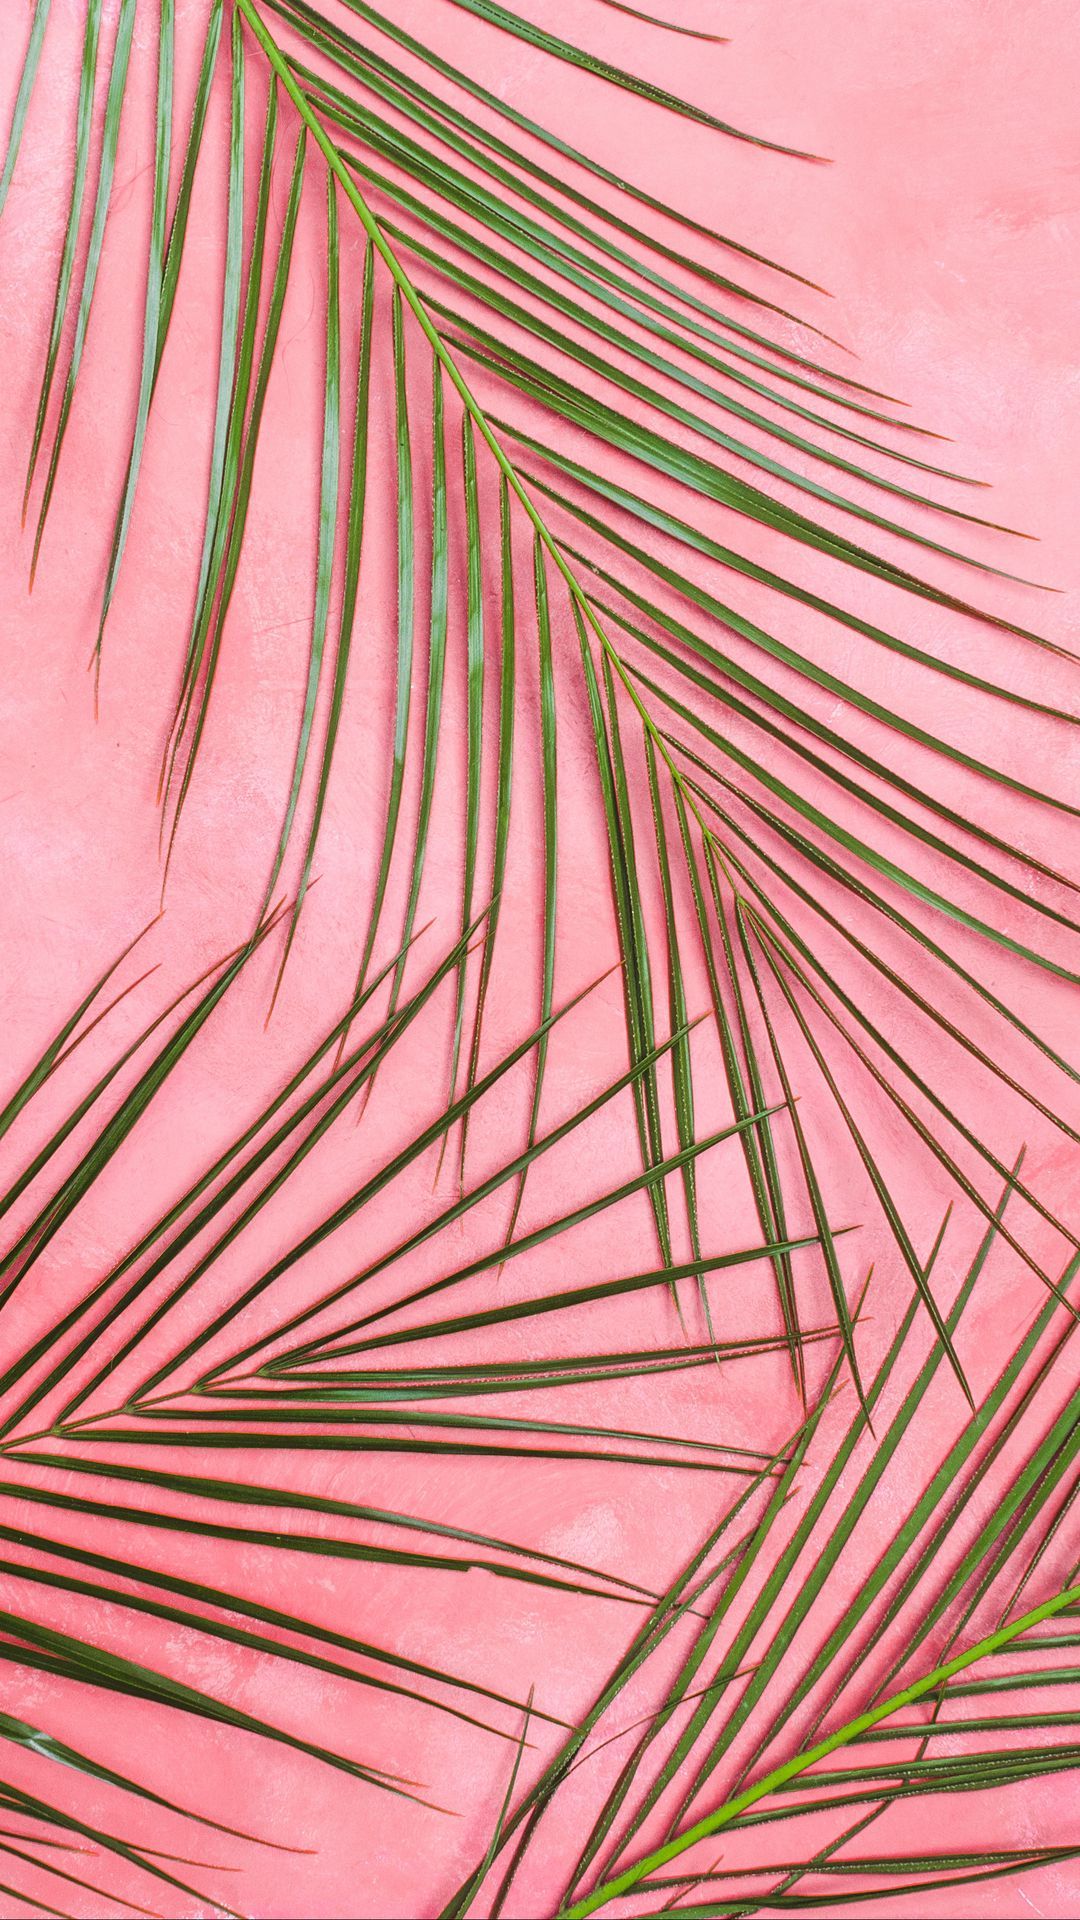 A palm leaf against a pink background - Pastel minimalist